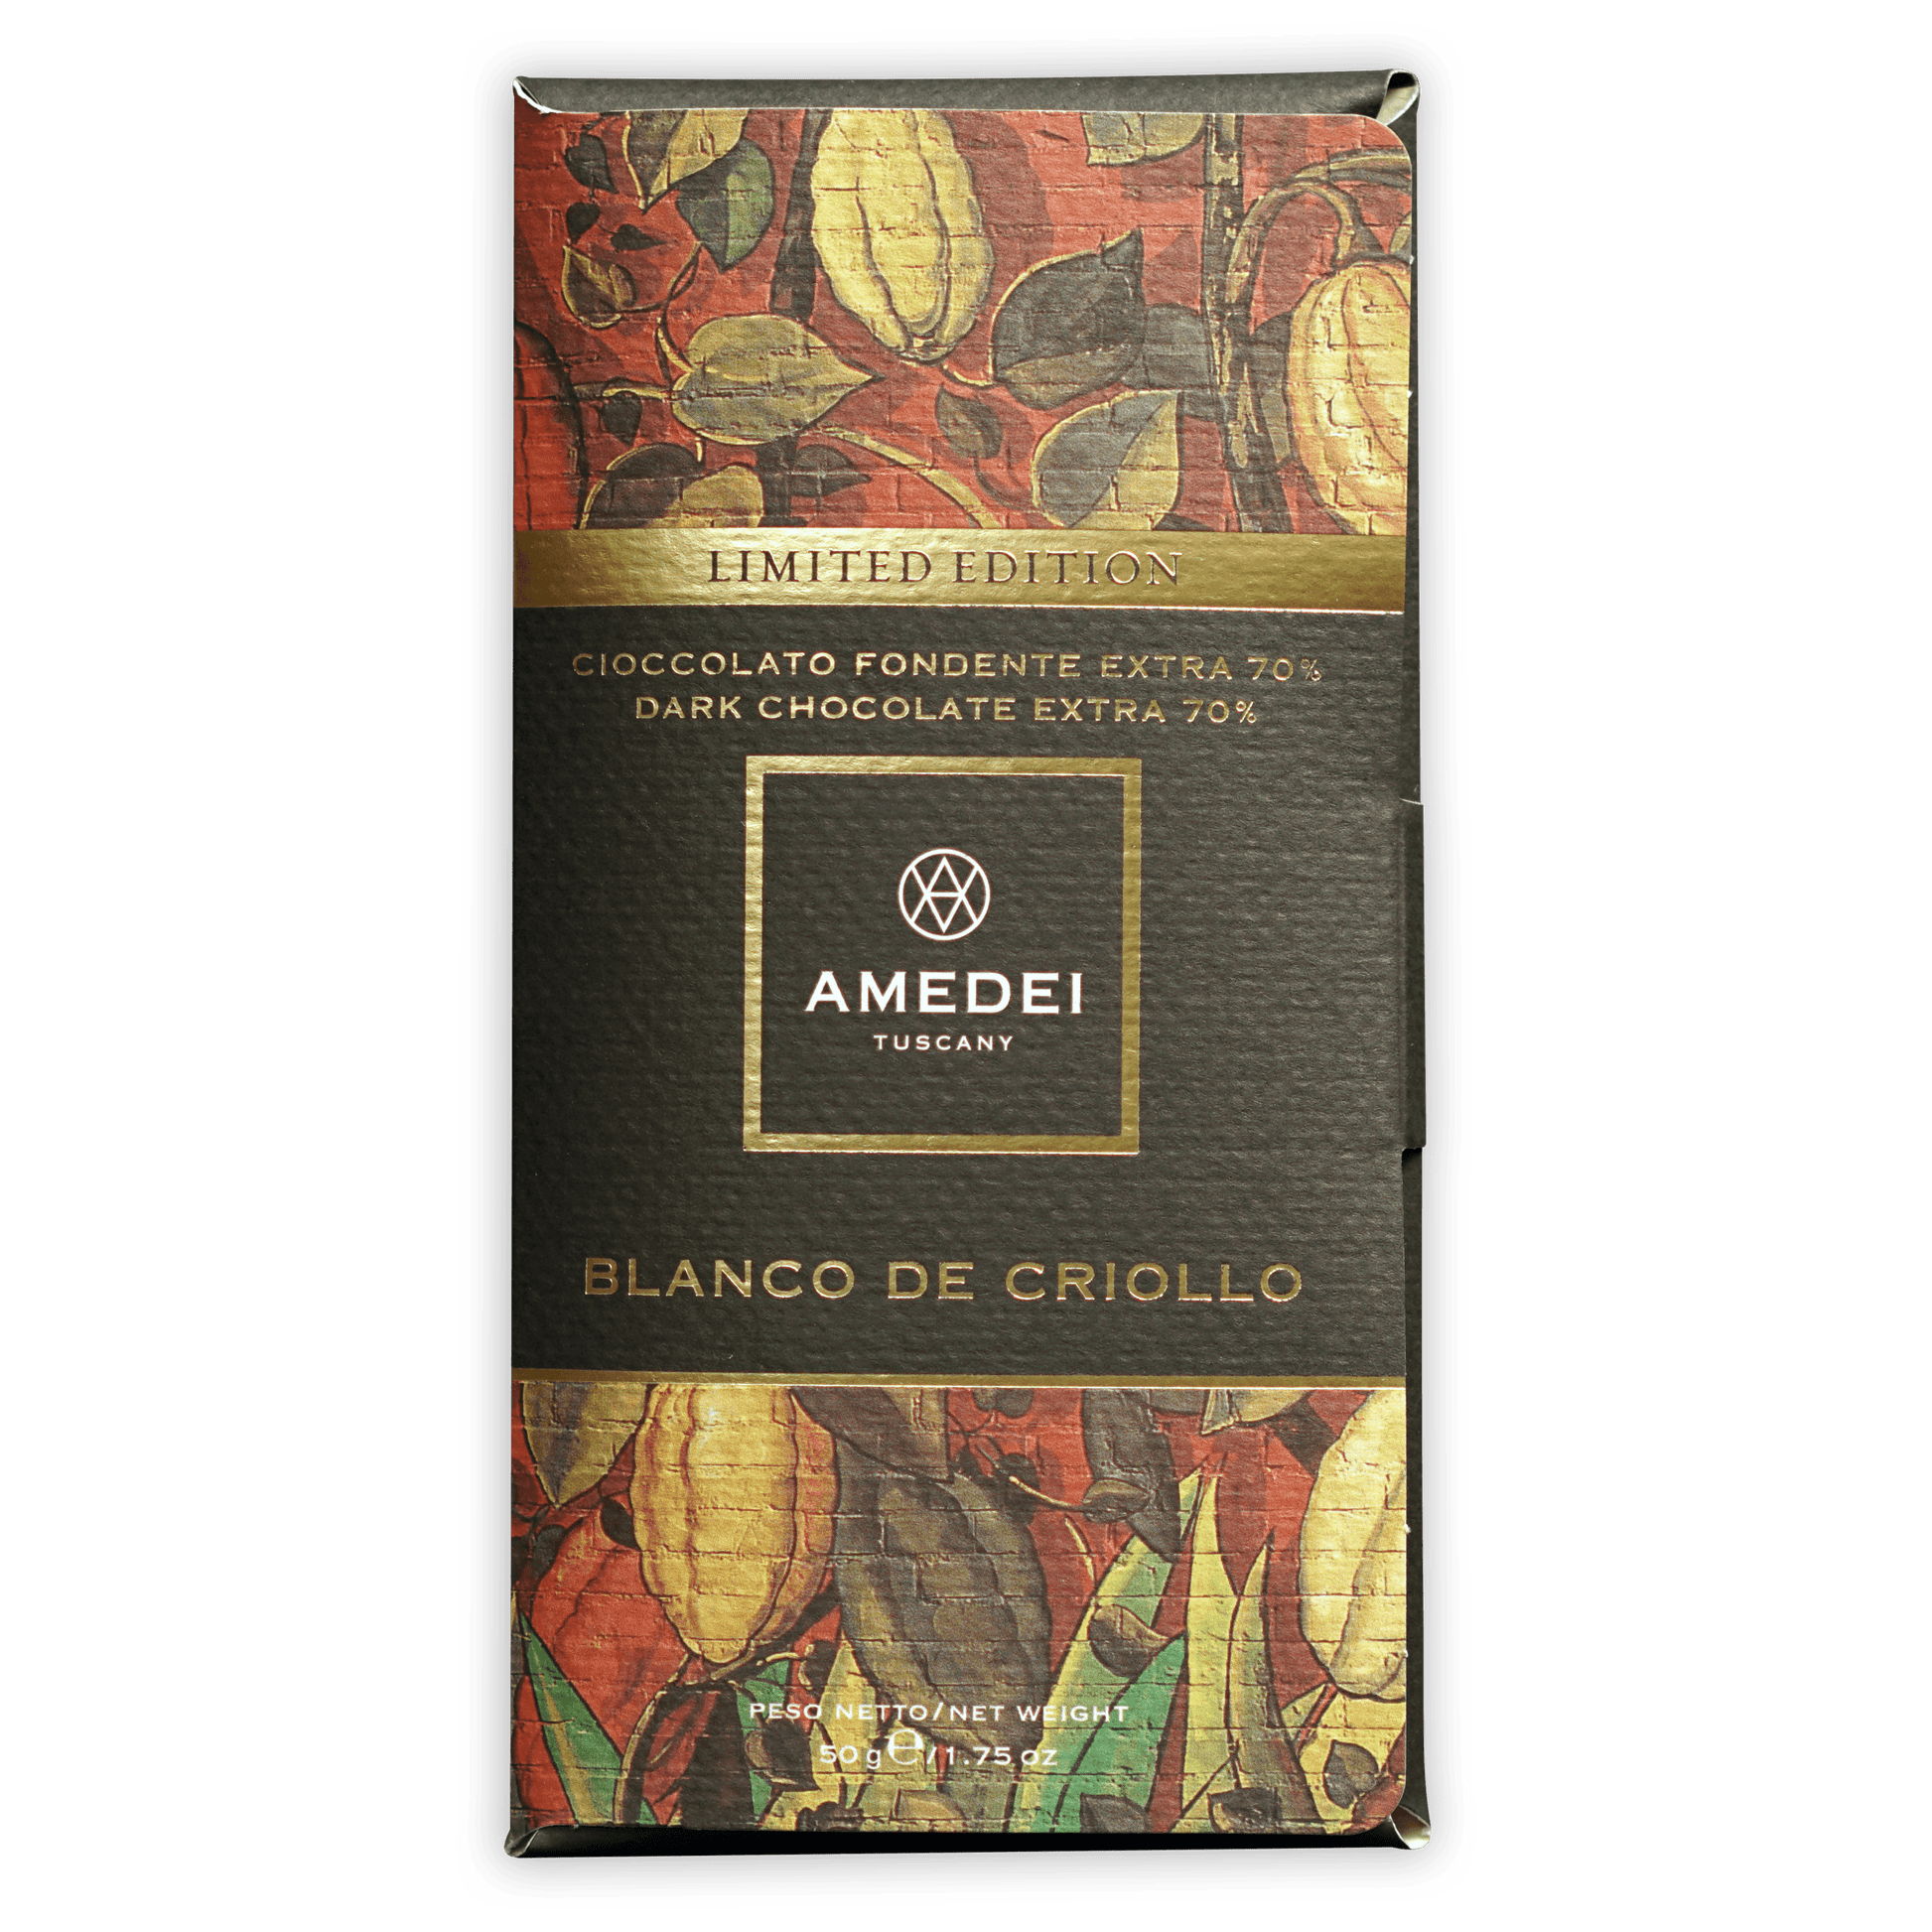 [LIMITED EDITION] Criollo Porcelana 70% Chocolate bar - 50g